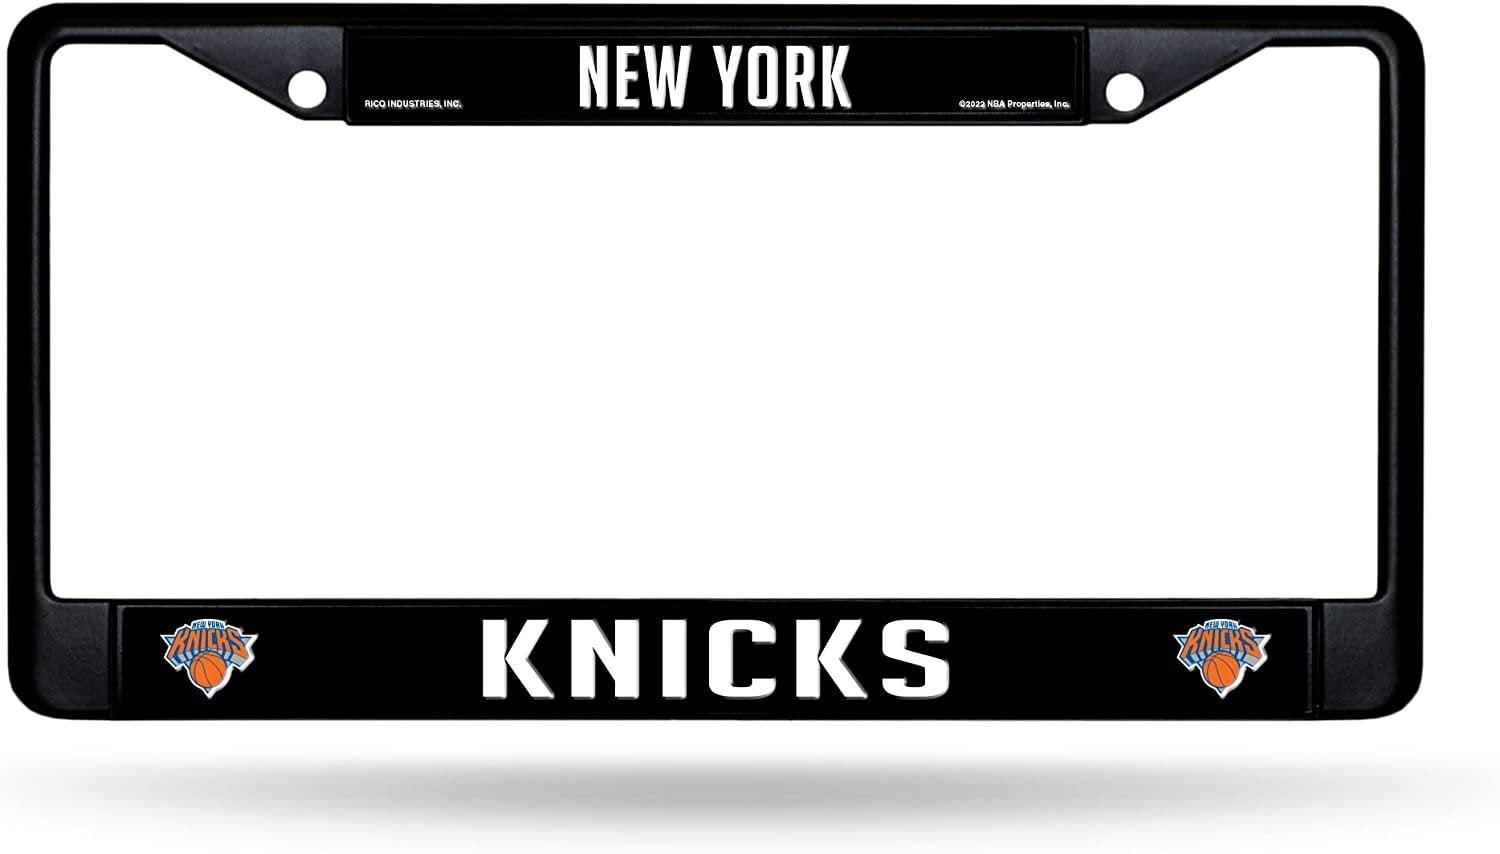 New York Knicks Black Metal License Plate Frame Chrome Tag Cover 6x12 Inch